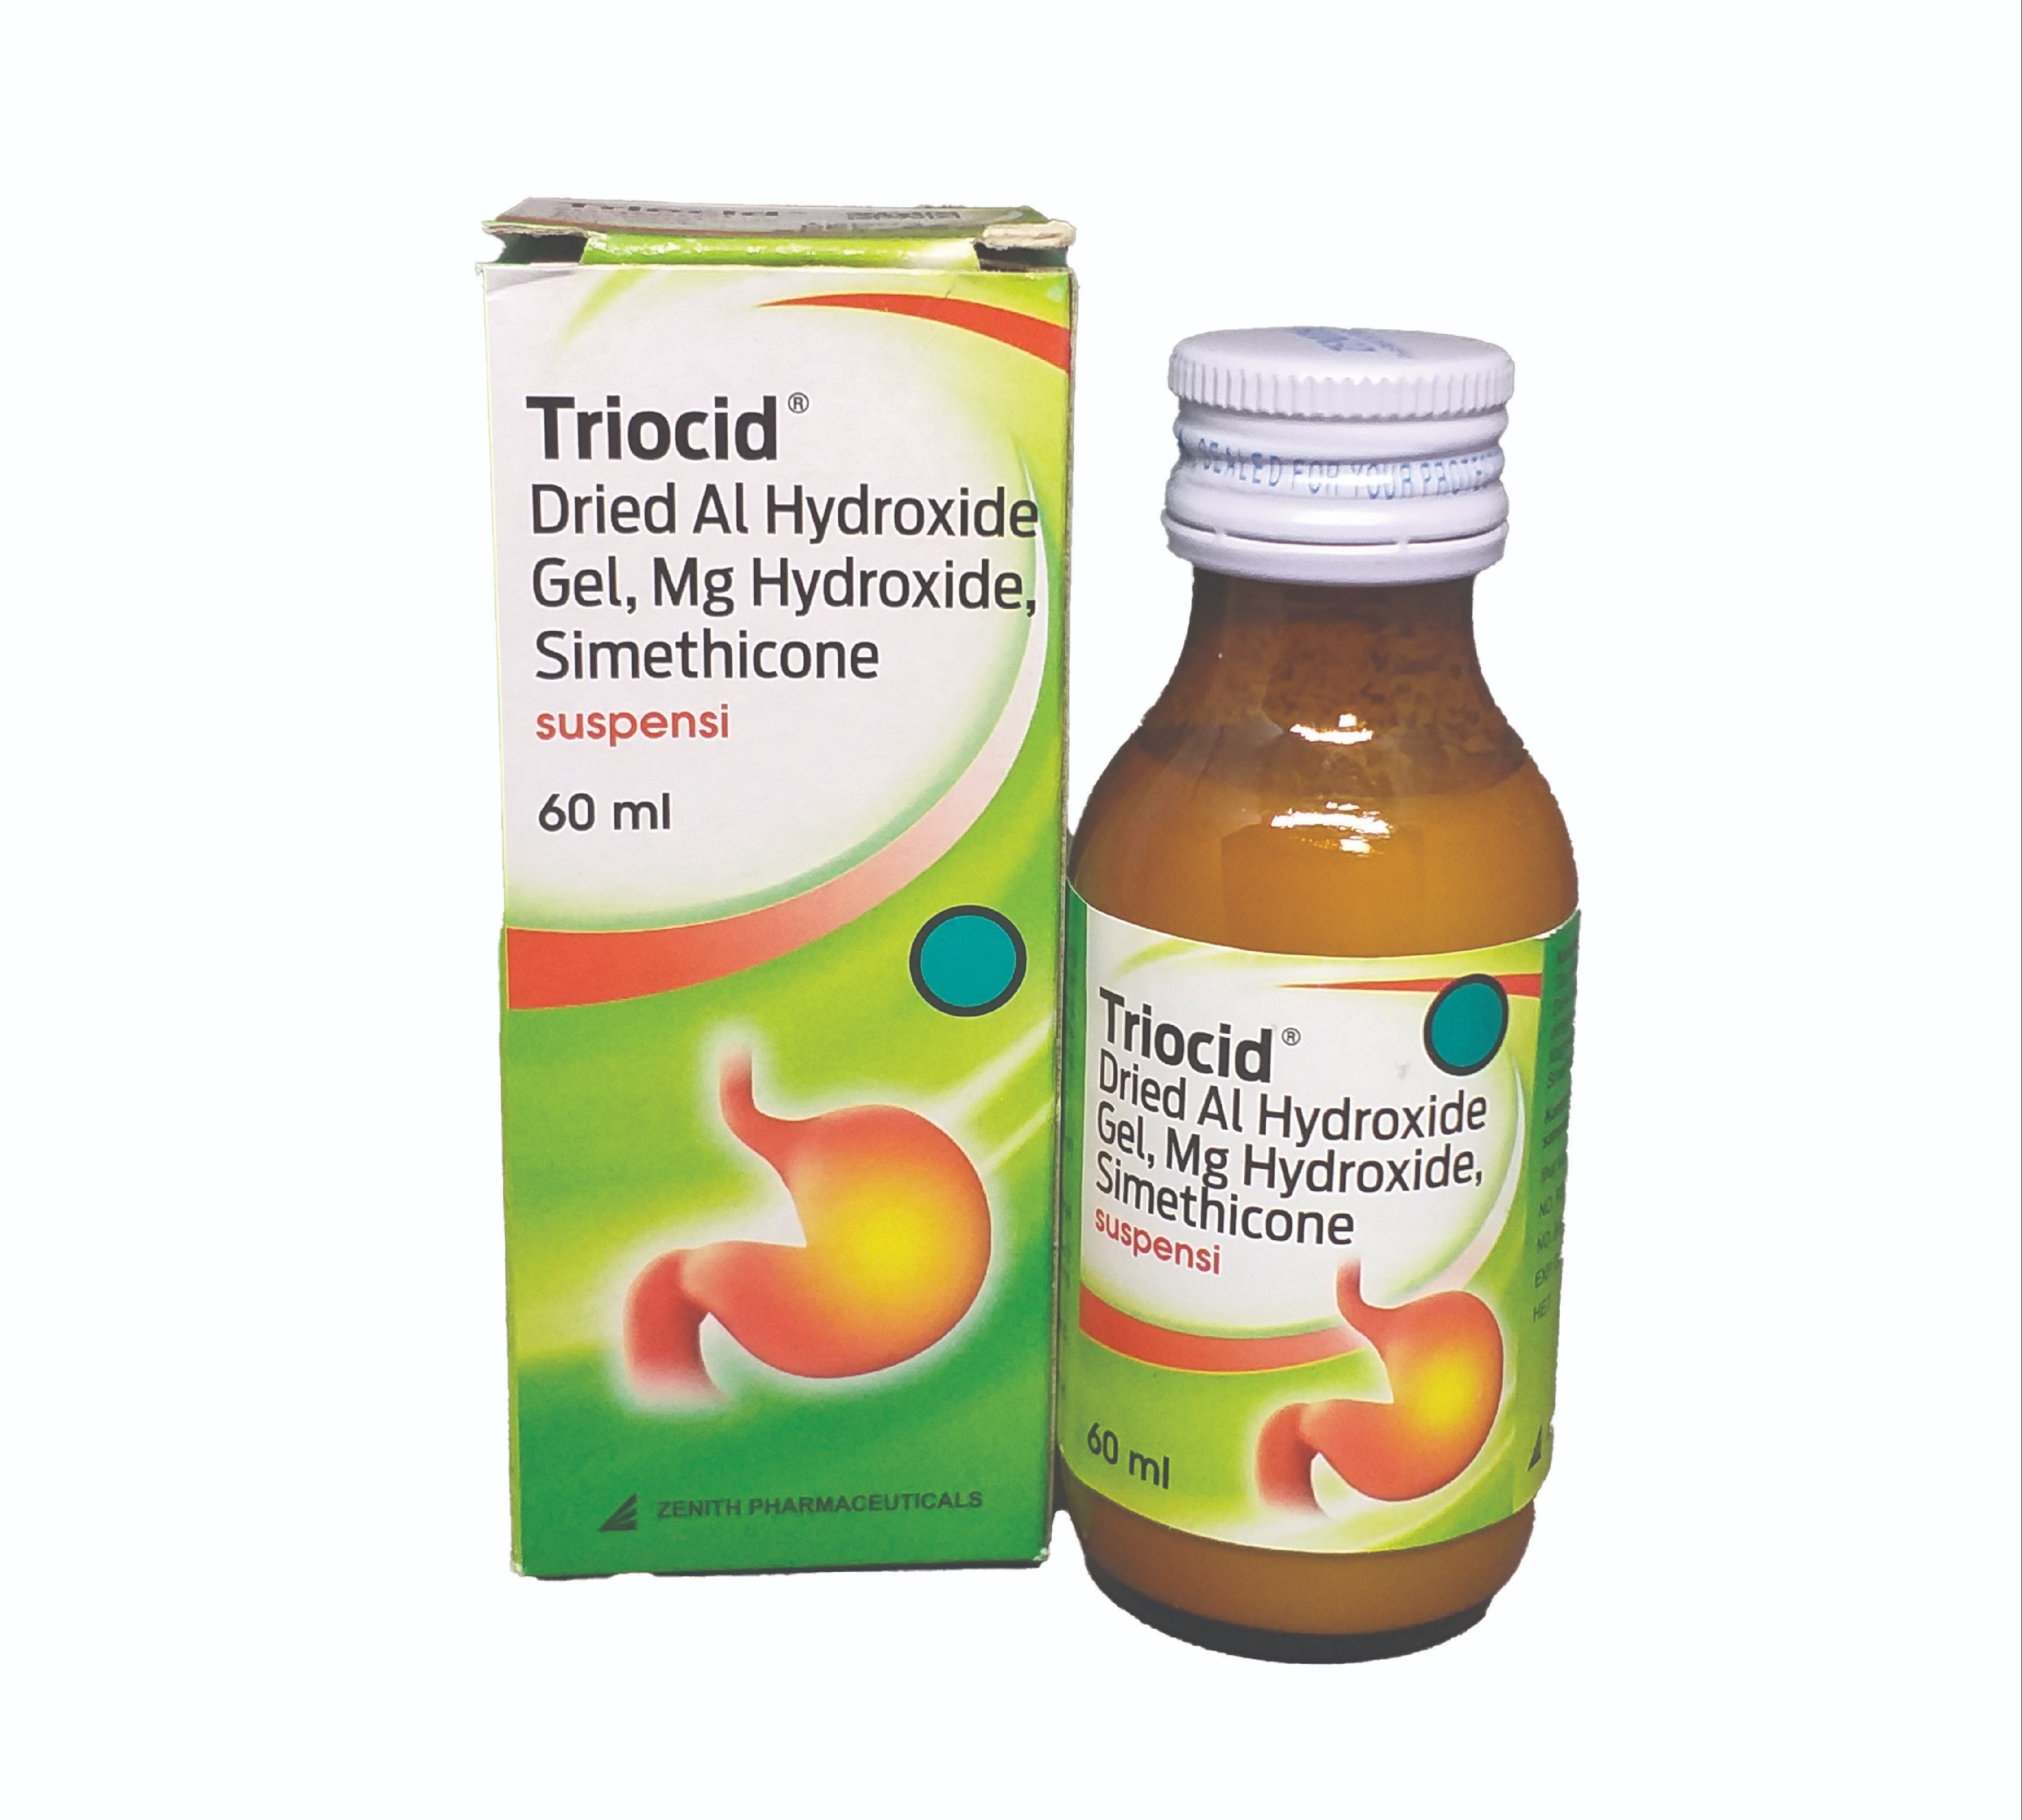 Triocid obat untuk apa